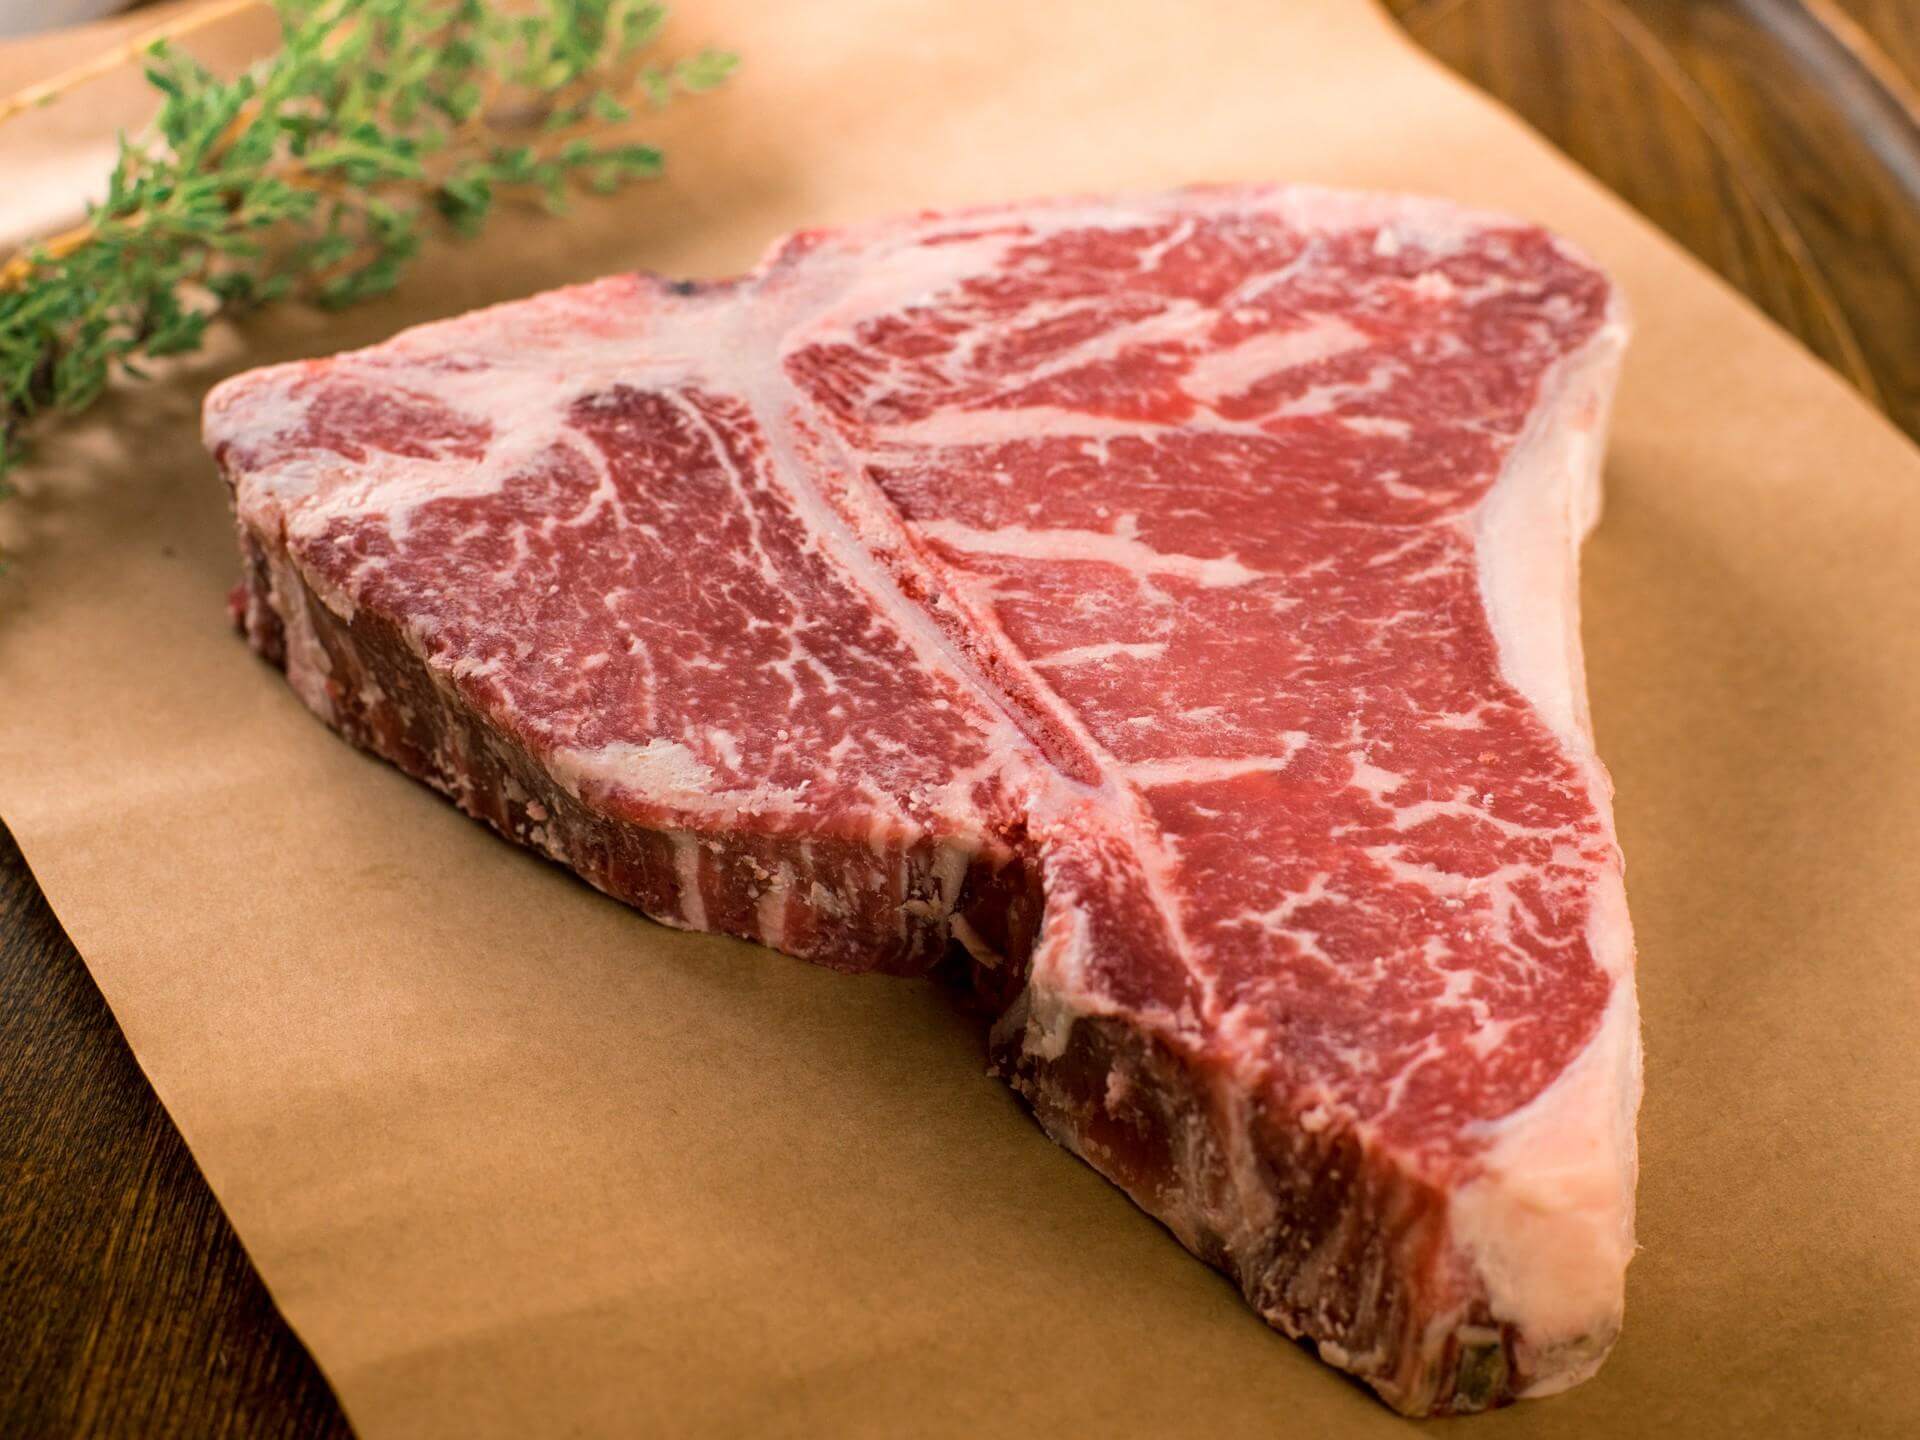 1574331903-905957125-th-t-s-n-bo-ch-t-t-bone-th-ng-th-c-2-ph-n-th-t-th-n-tren-m-t-mi-ng-steak-1.jpg